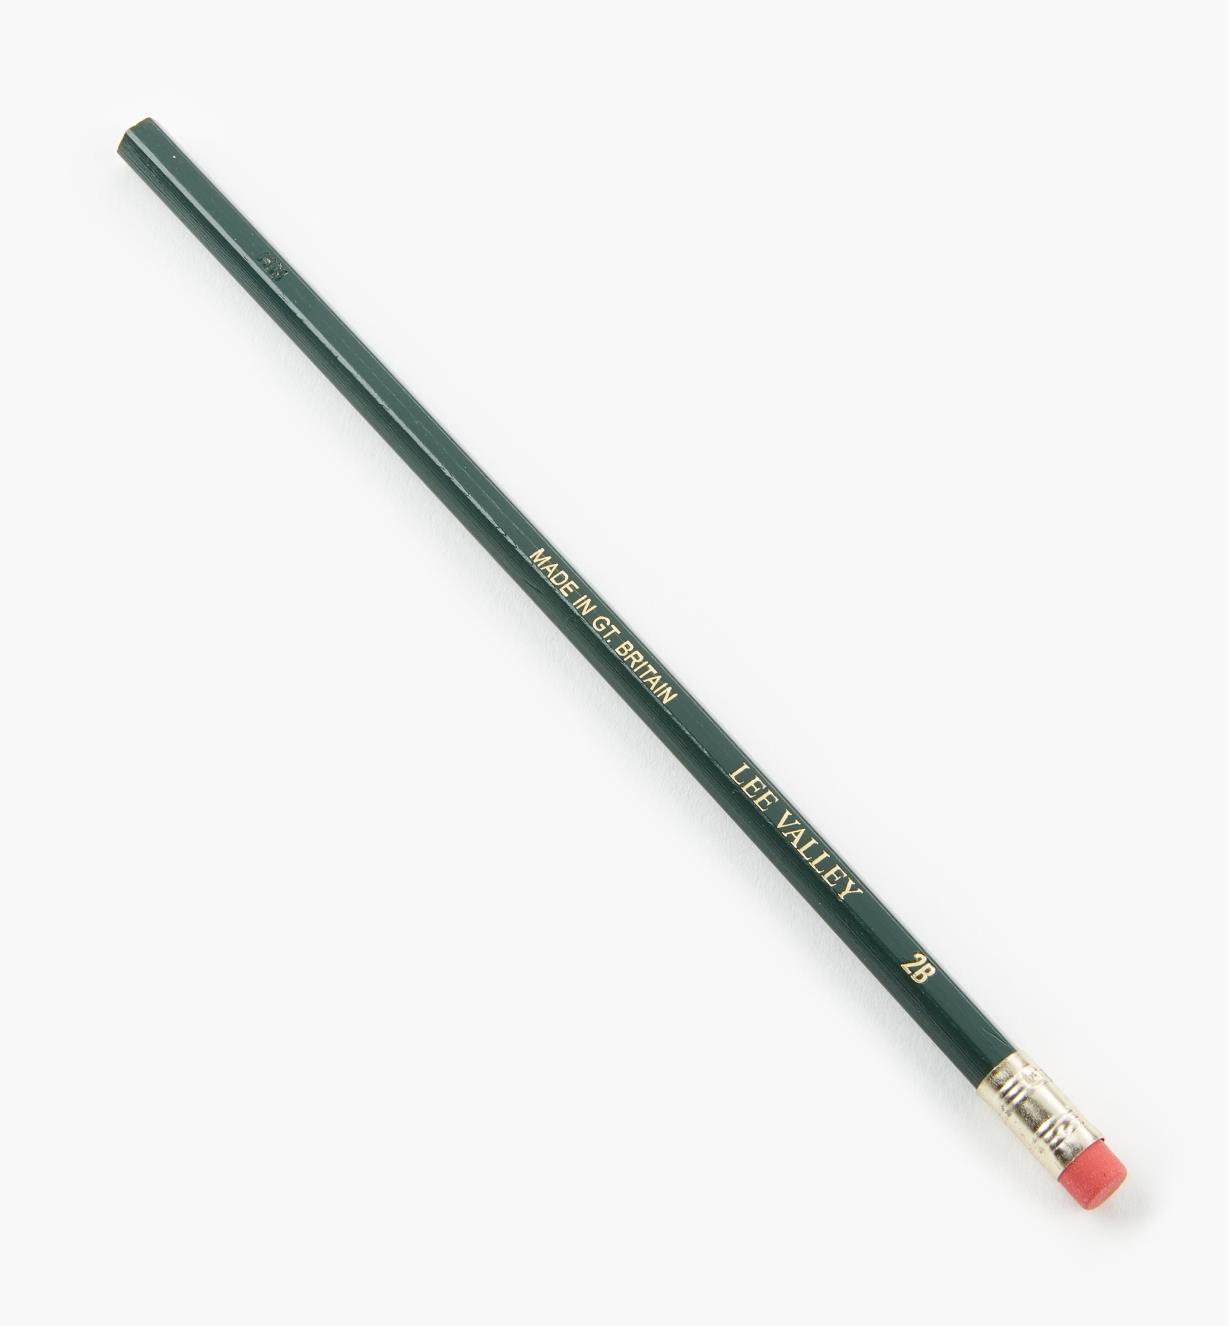 Lee Valley Pencils - Lee Valley Tools